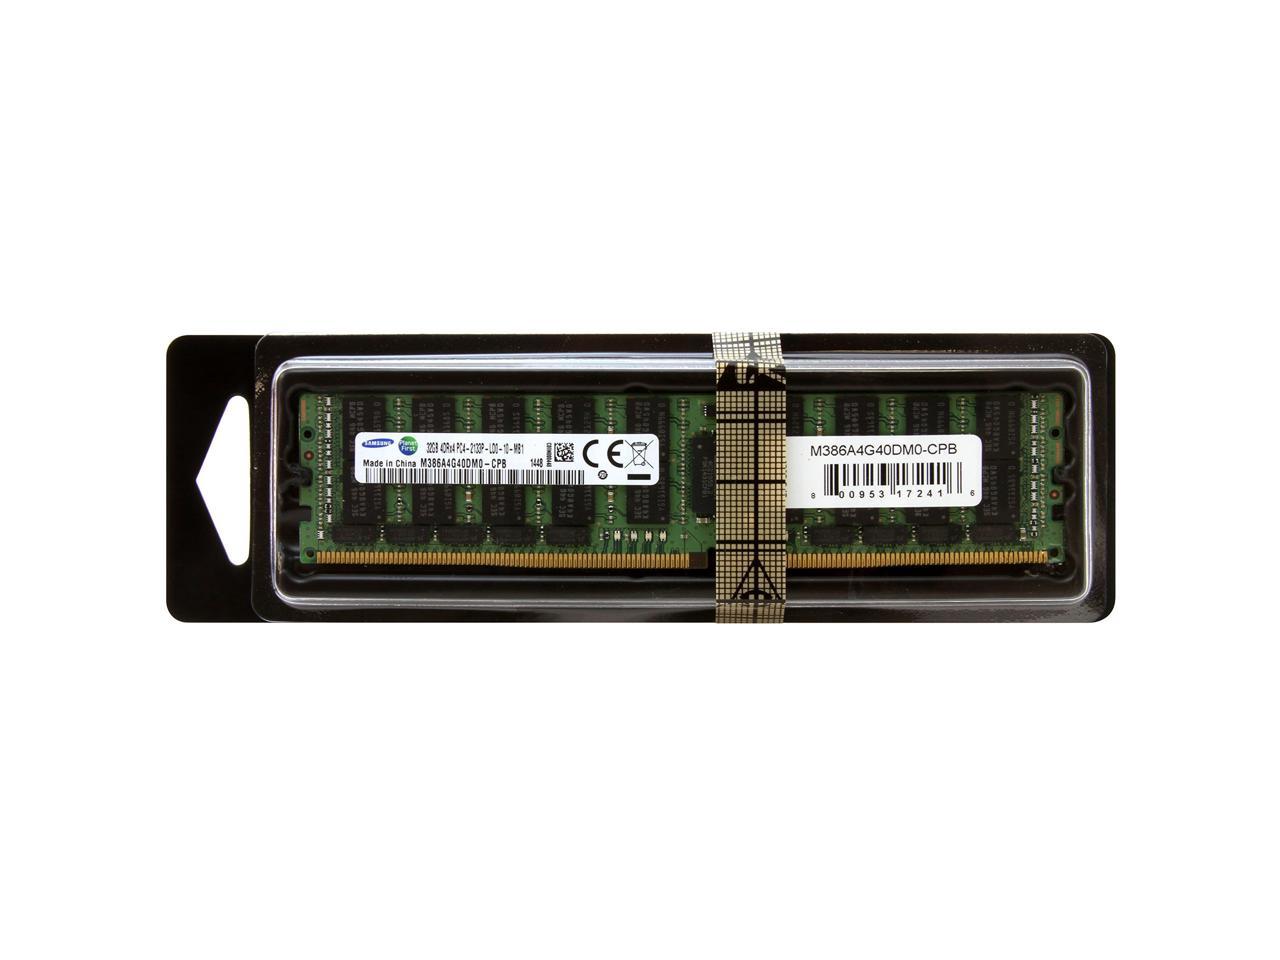 MemoryMasters Compatible DDR4 2133MHzCL15 32GB Internal Memory M386A4G40DM0-CPB PC4 2133